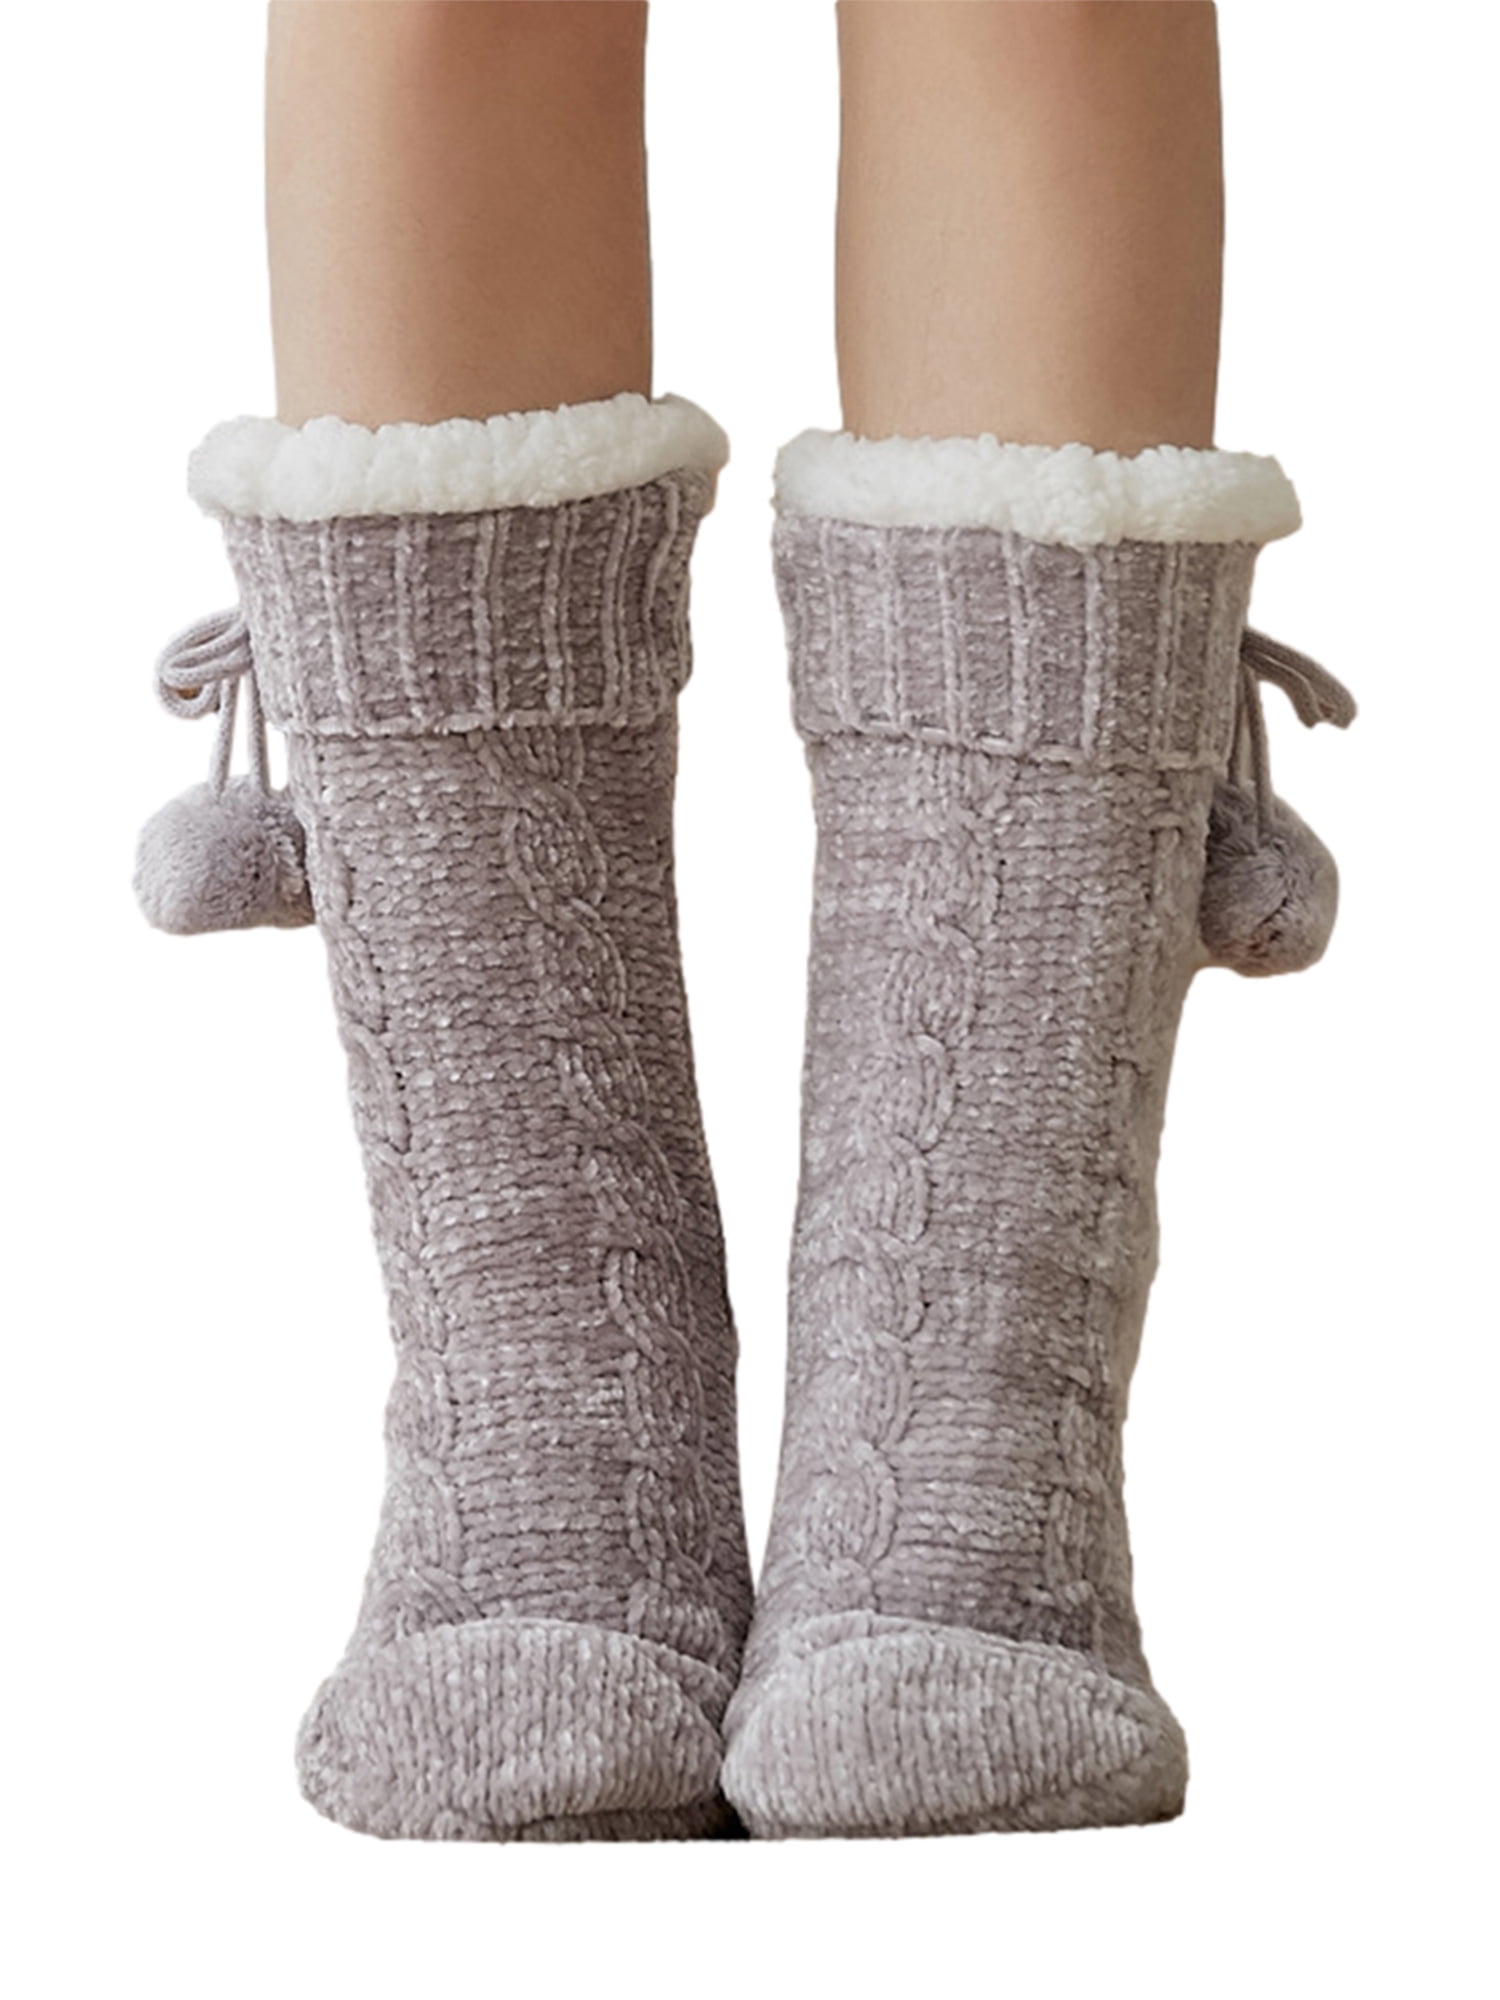 Follkee Women's Socks Merino Wool Thick and Cozy Ivory White Great Gif